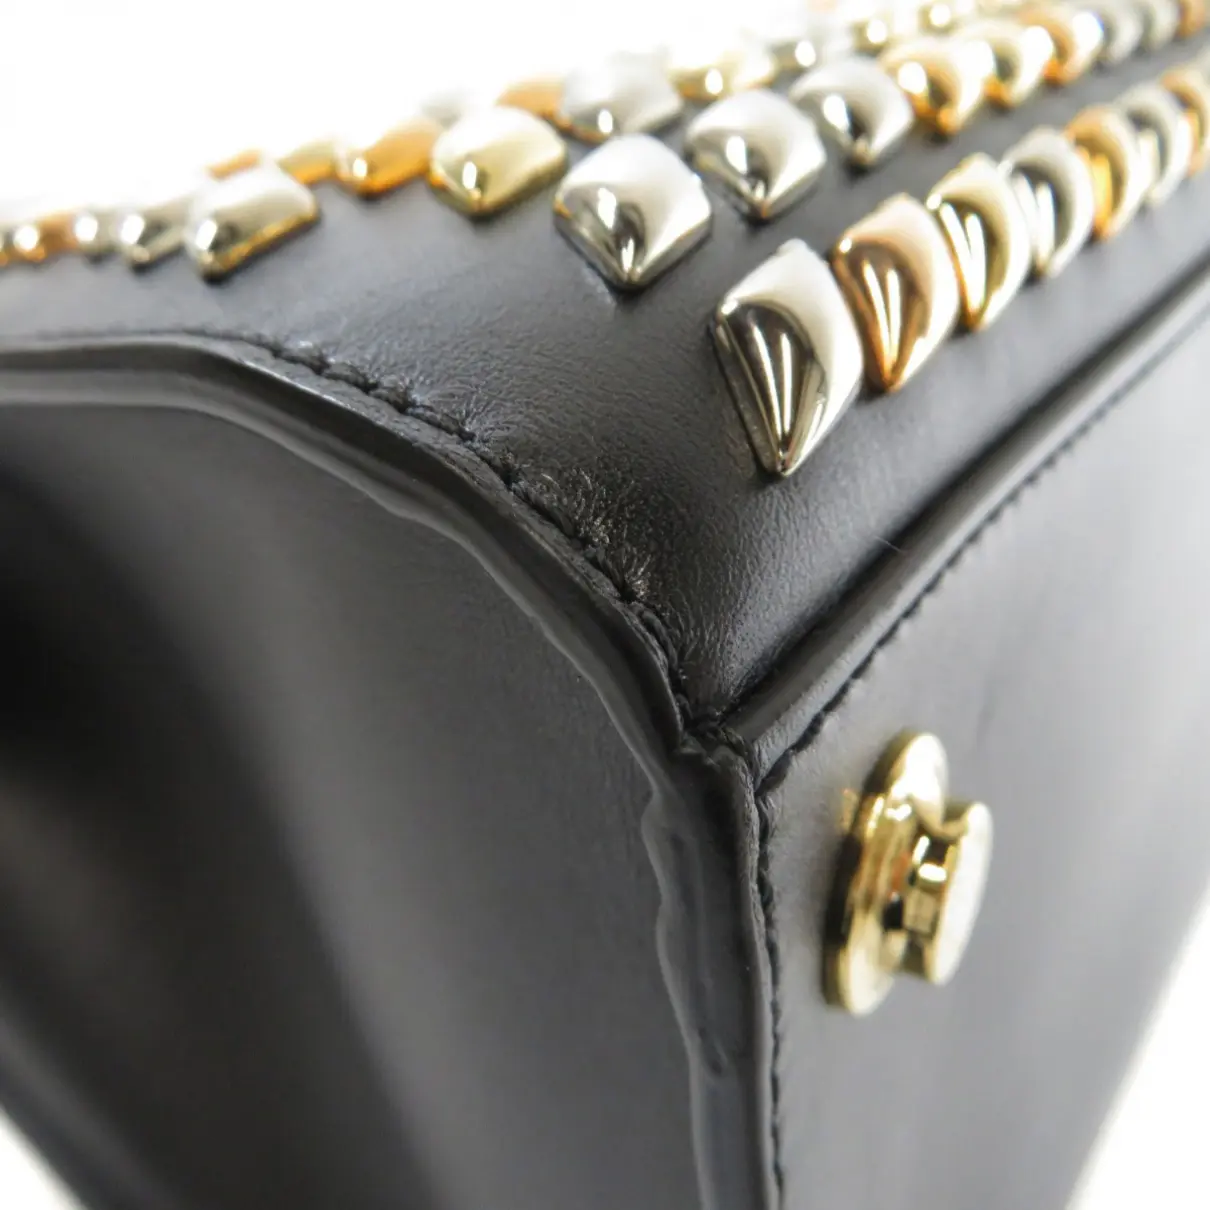 City Steamer leather handbag Louis Vuitton